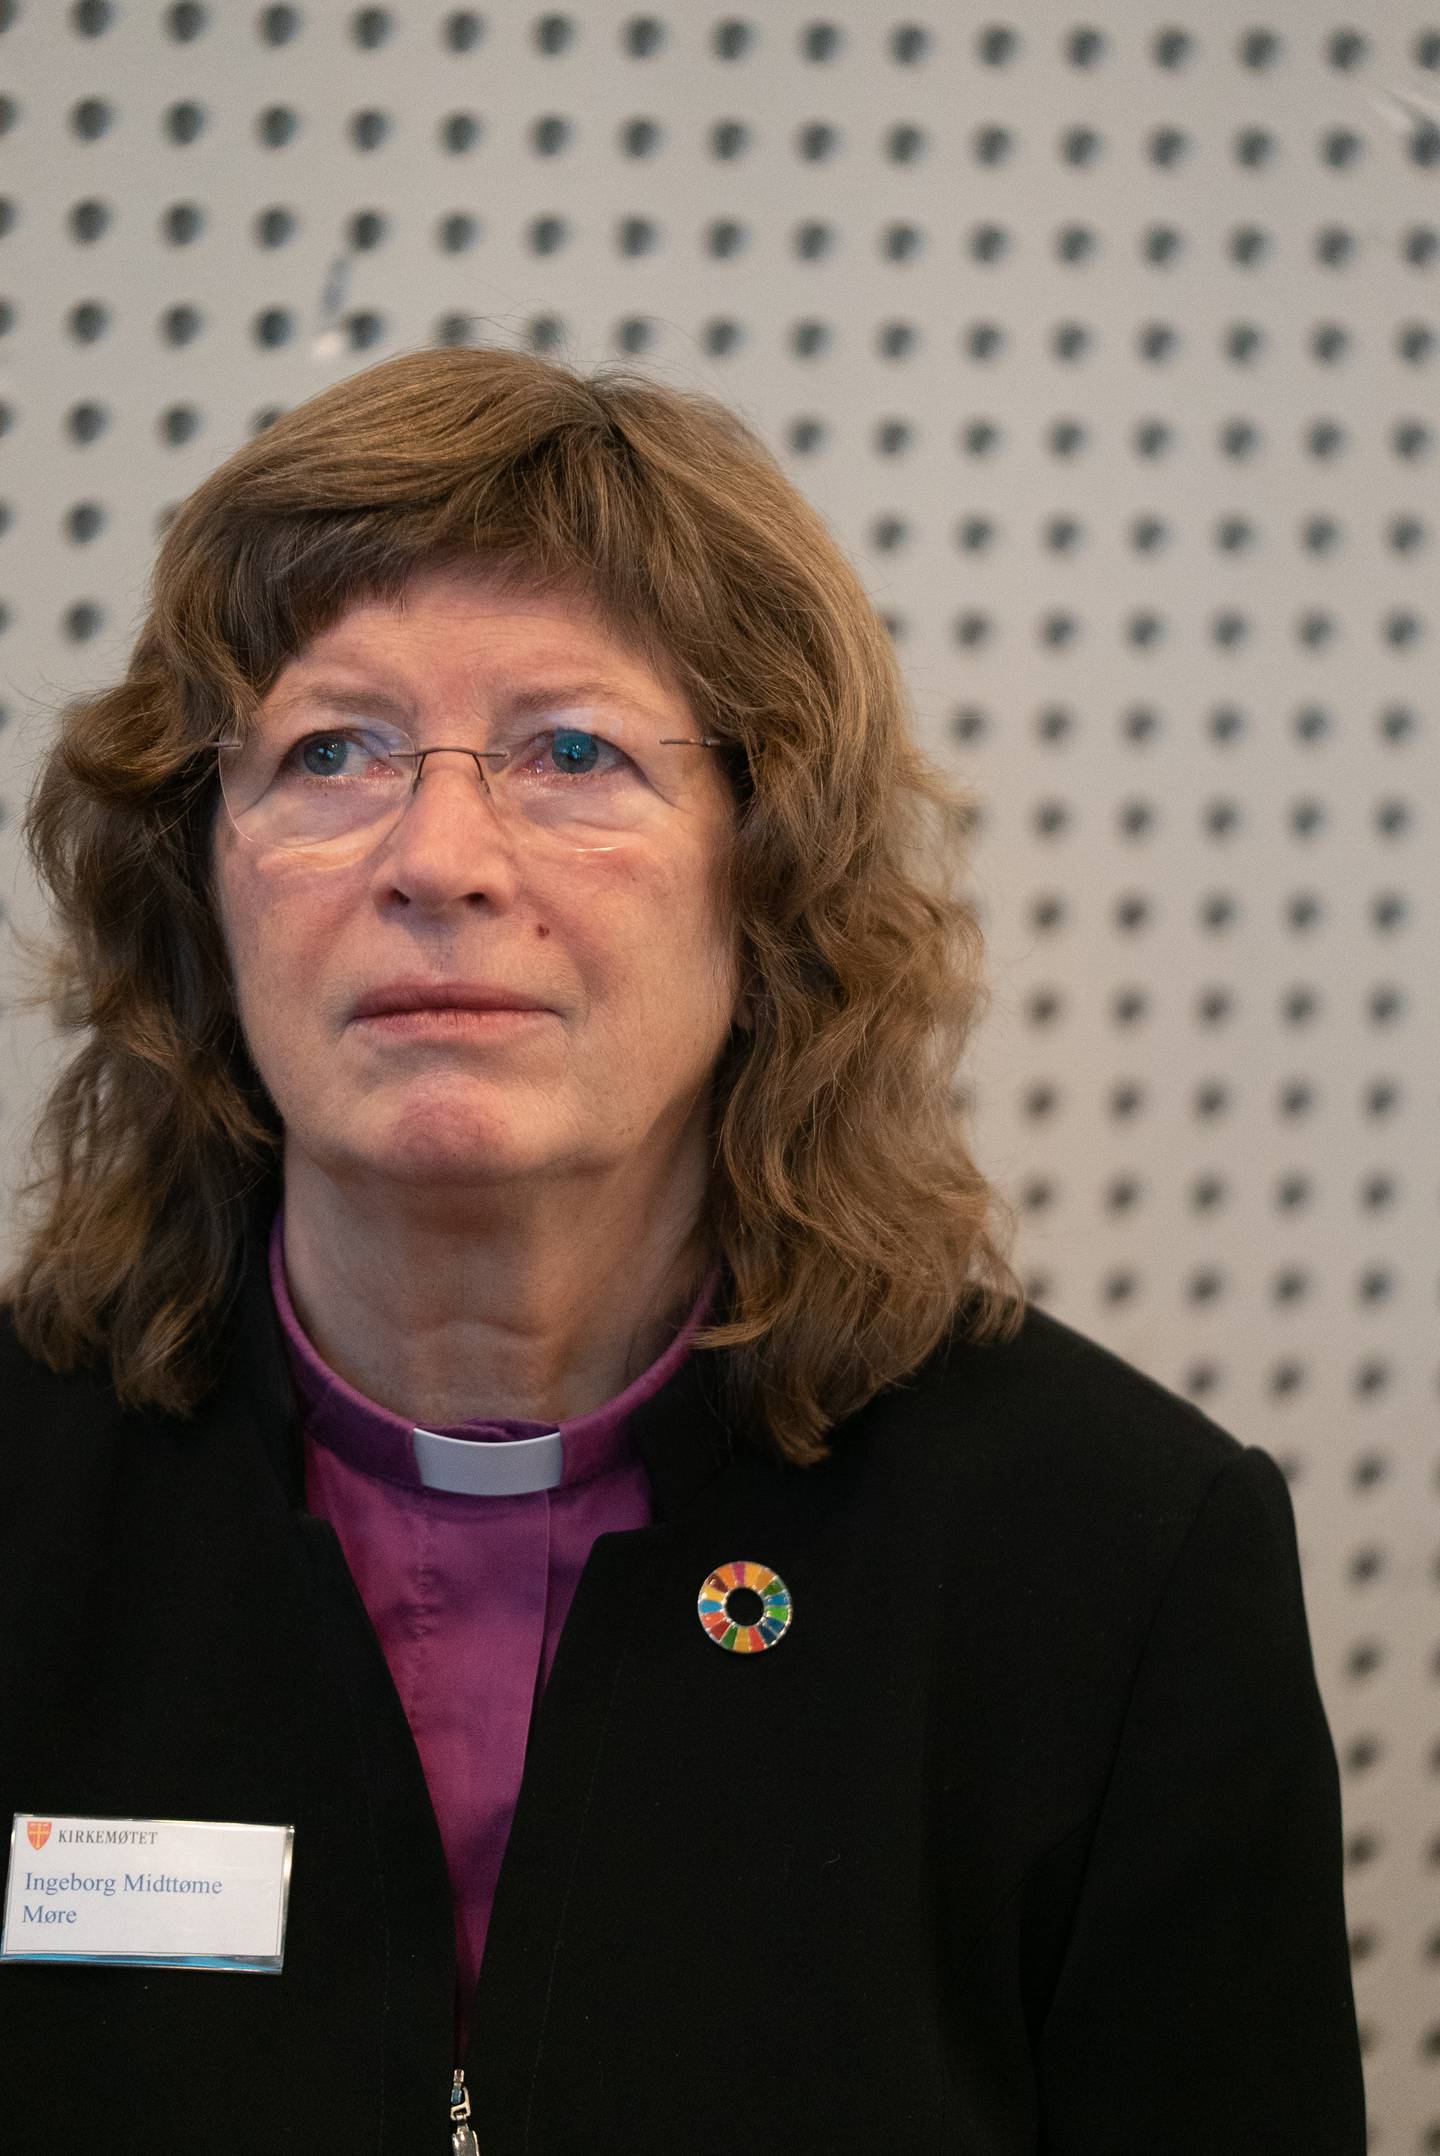 Bilder KM 2021- fredag   Biskop Ingeborg Midttømme